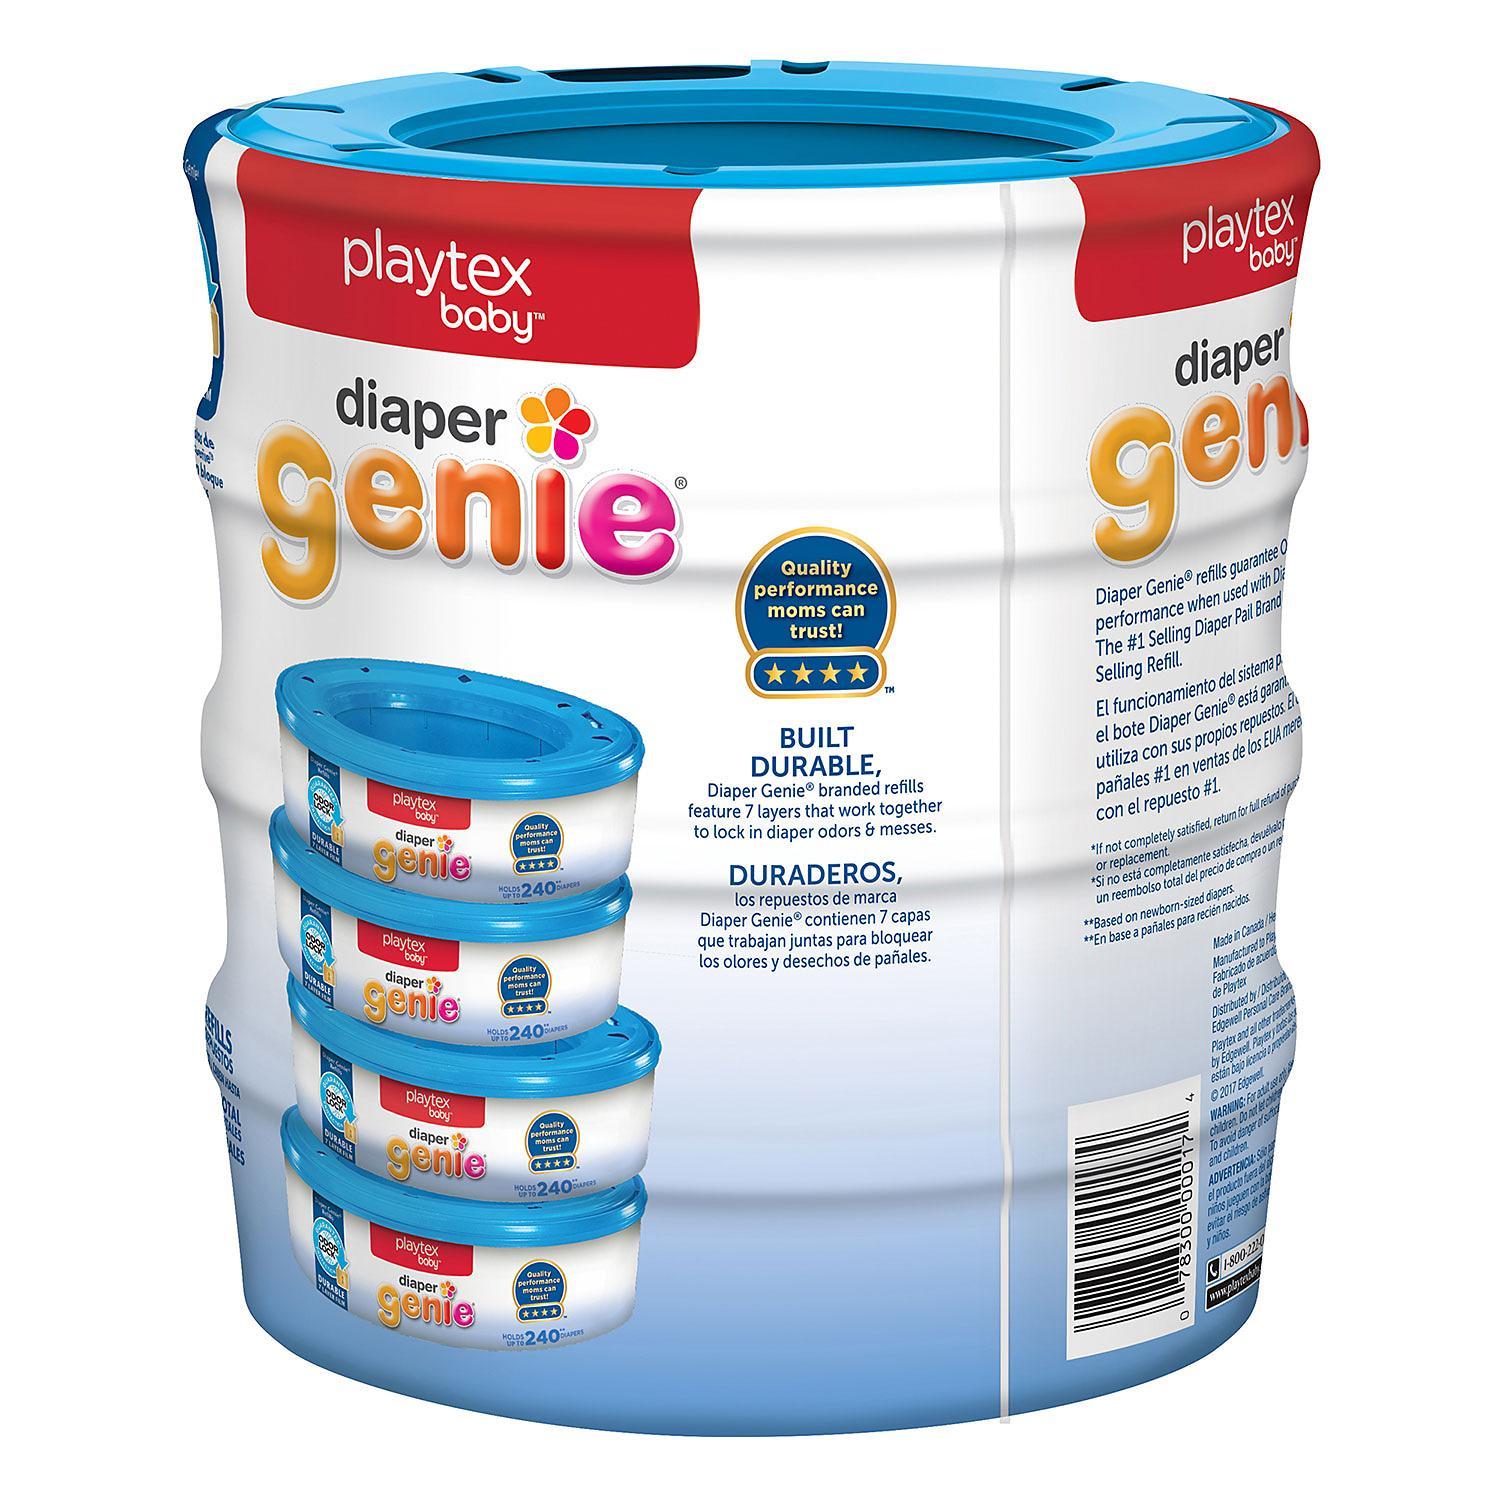 Playtex Diaper Genie Value Size Refill, 960 Ct Multicolor Unisex - image 4 of 8